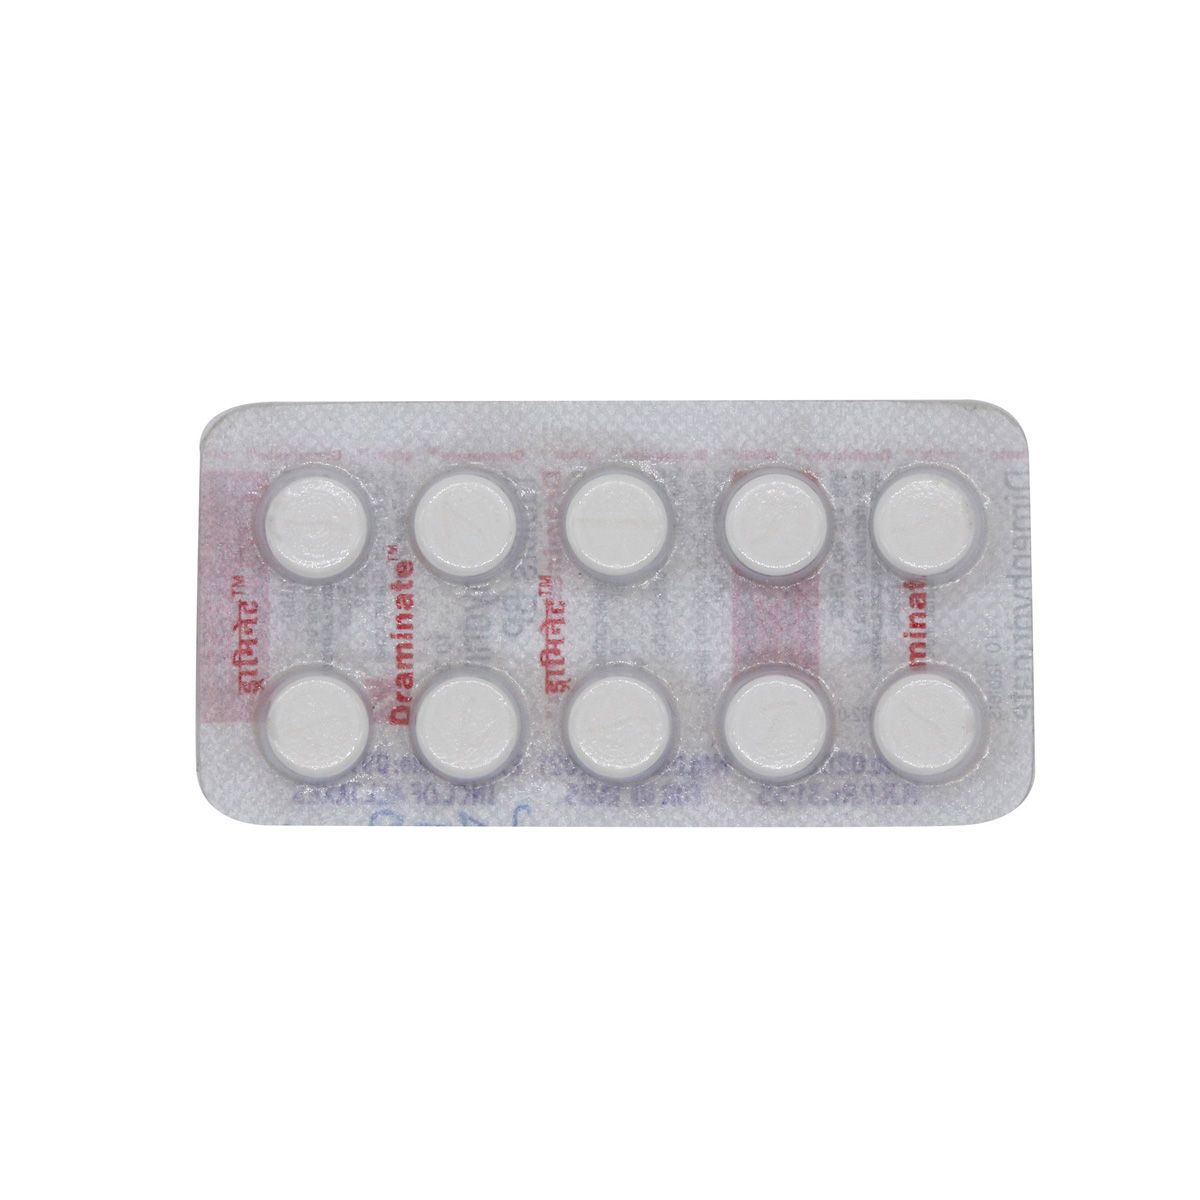 Buy Draminate 50 mg Tablet 10's Online